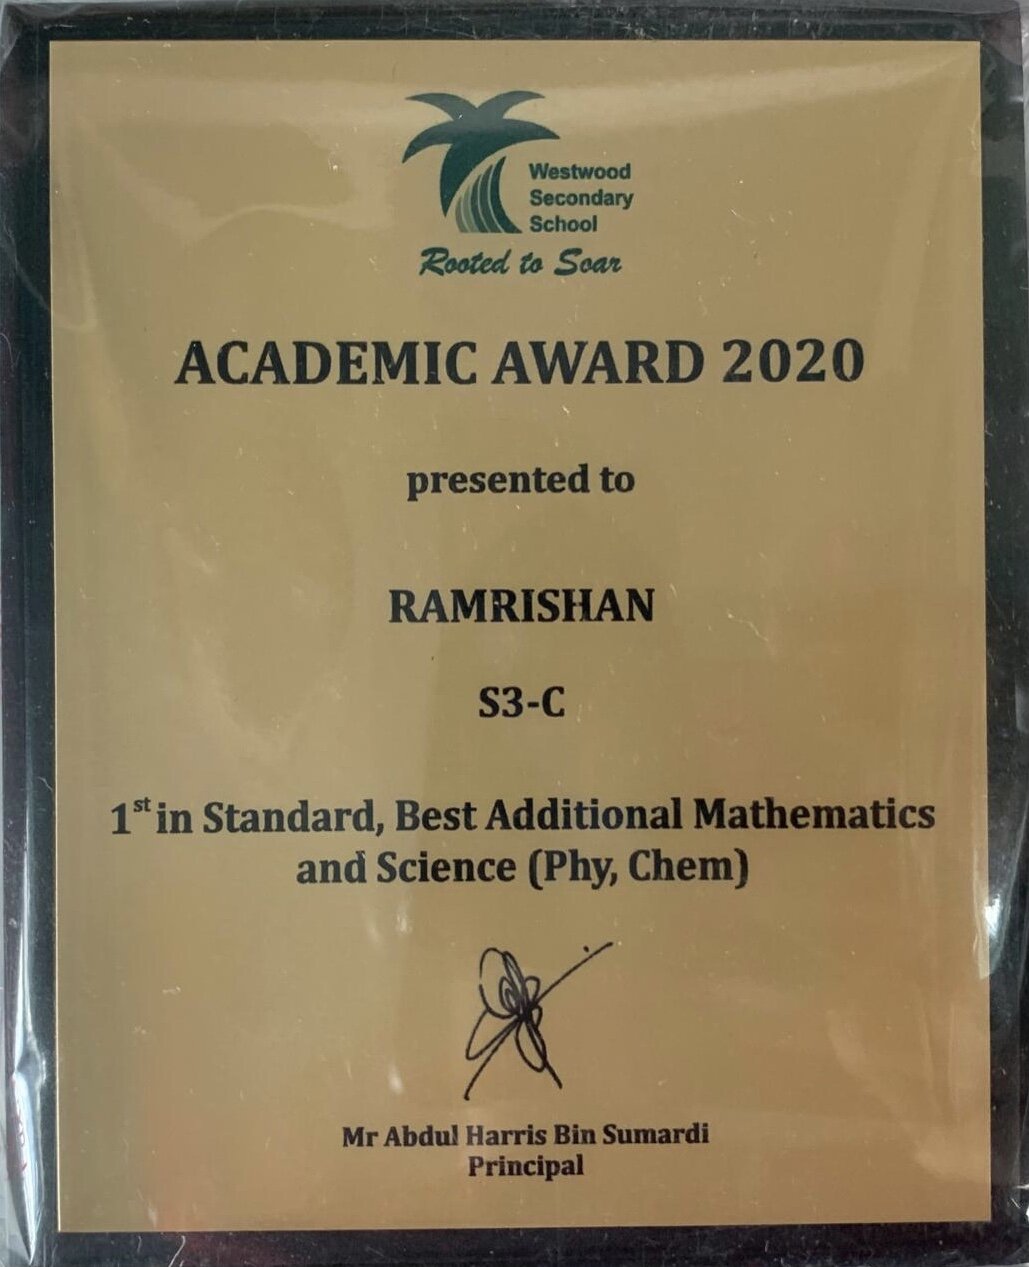 Academic Award 2020